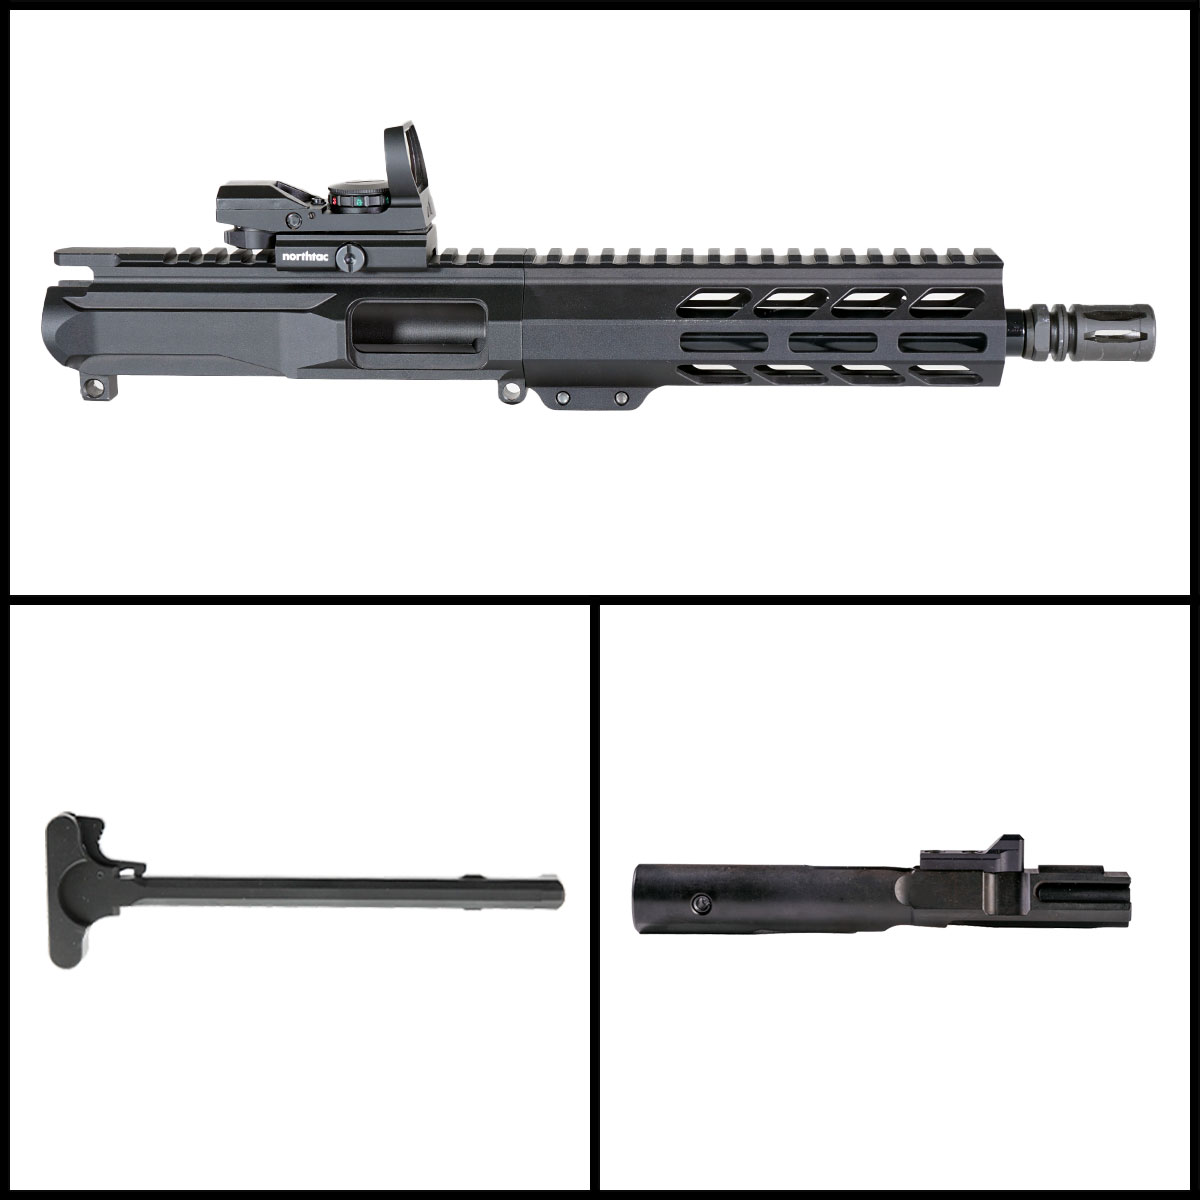 OTD 'Eternal Night Gen 2 w/ MVR' 8.5-inch AR-15 9mm Nitride Pistol Complete Upper Build Kit